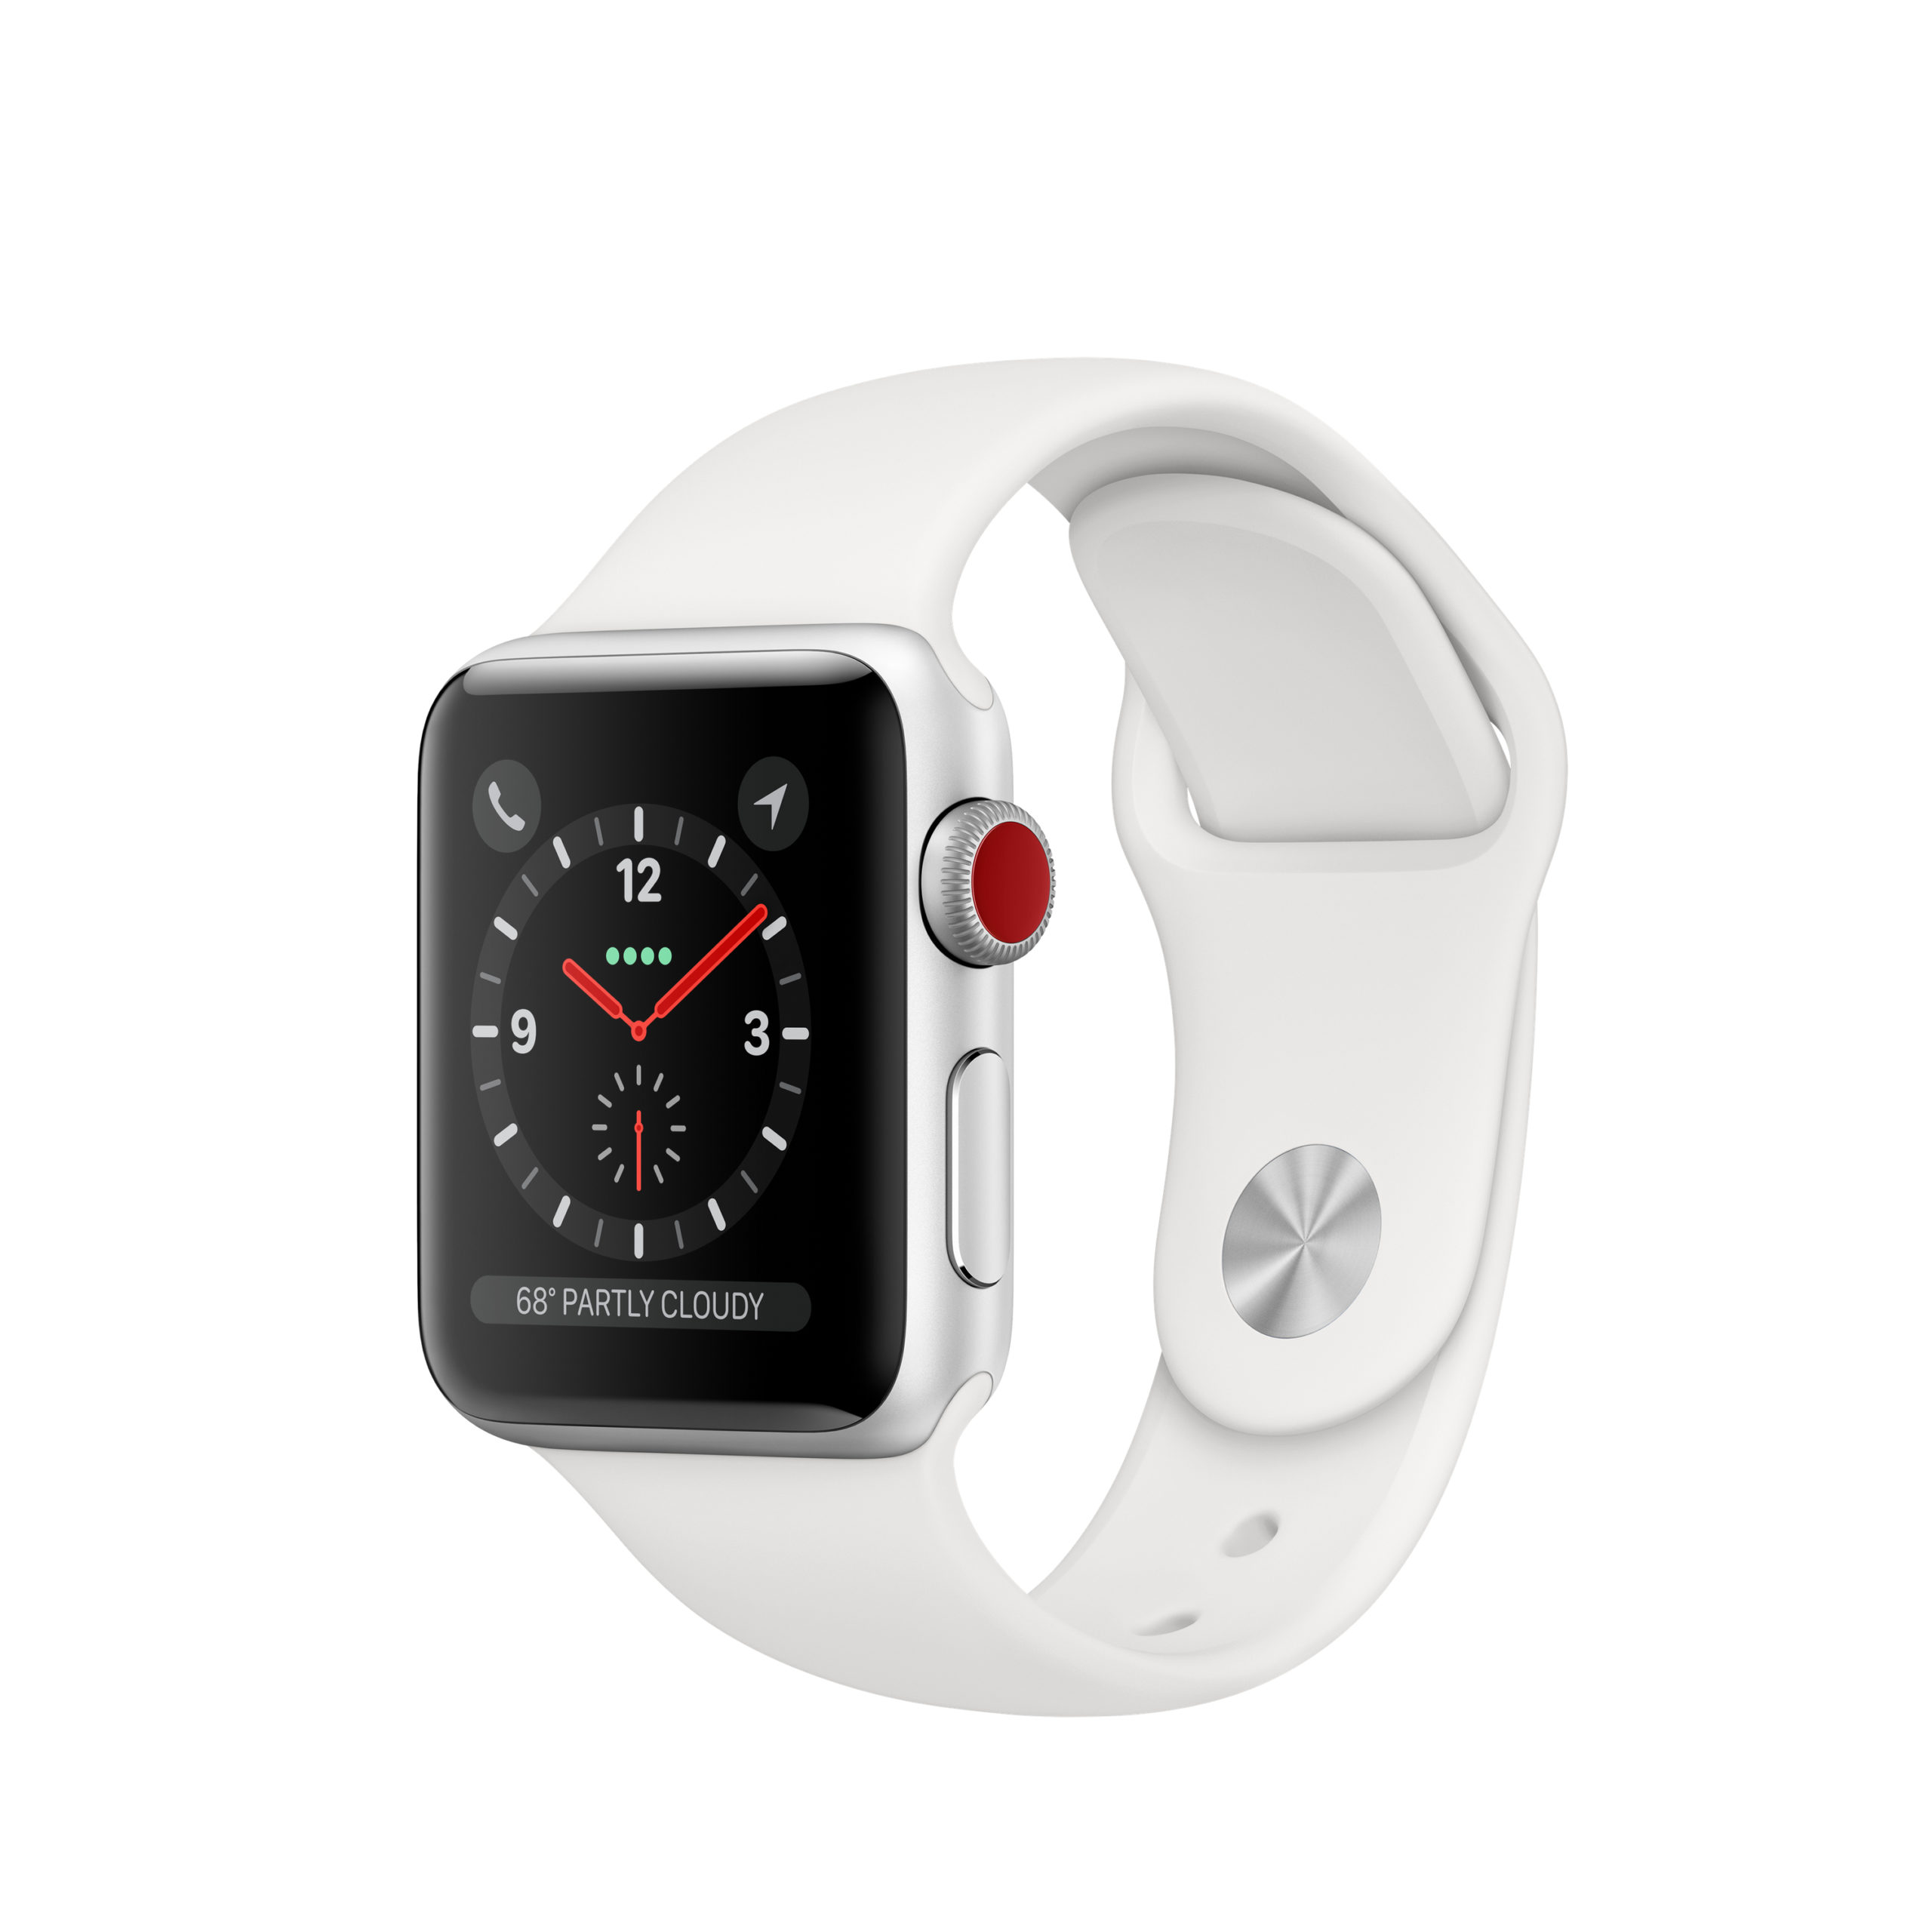 MTGG2LL/A - $180 - Apple Watch Series 3 (GPS + Cellular) 38mm SILVER